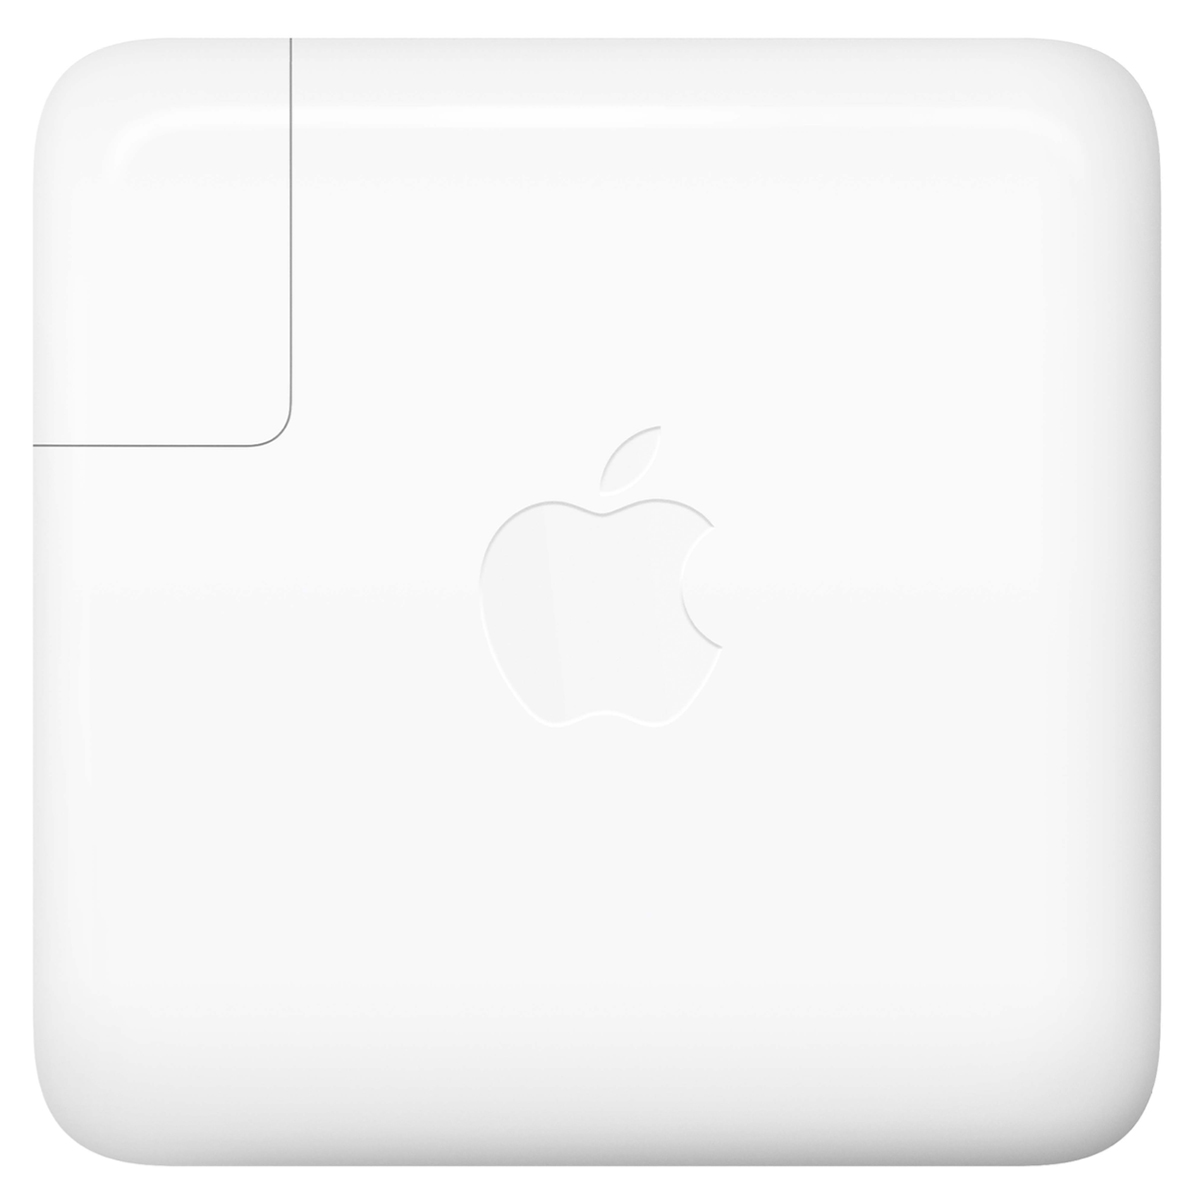 M1 MacBook Pro/MacBook Air Won't Turn On? 9 Best Fixes